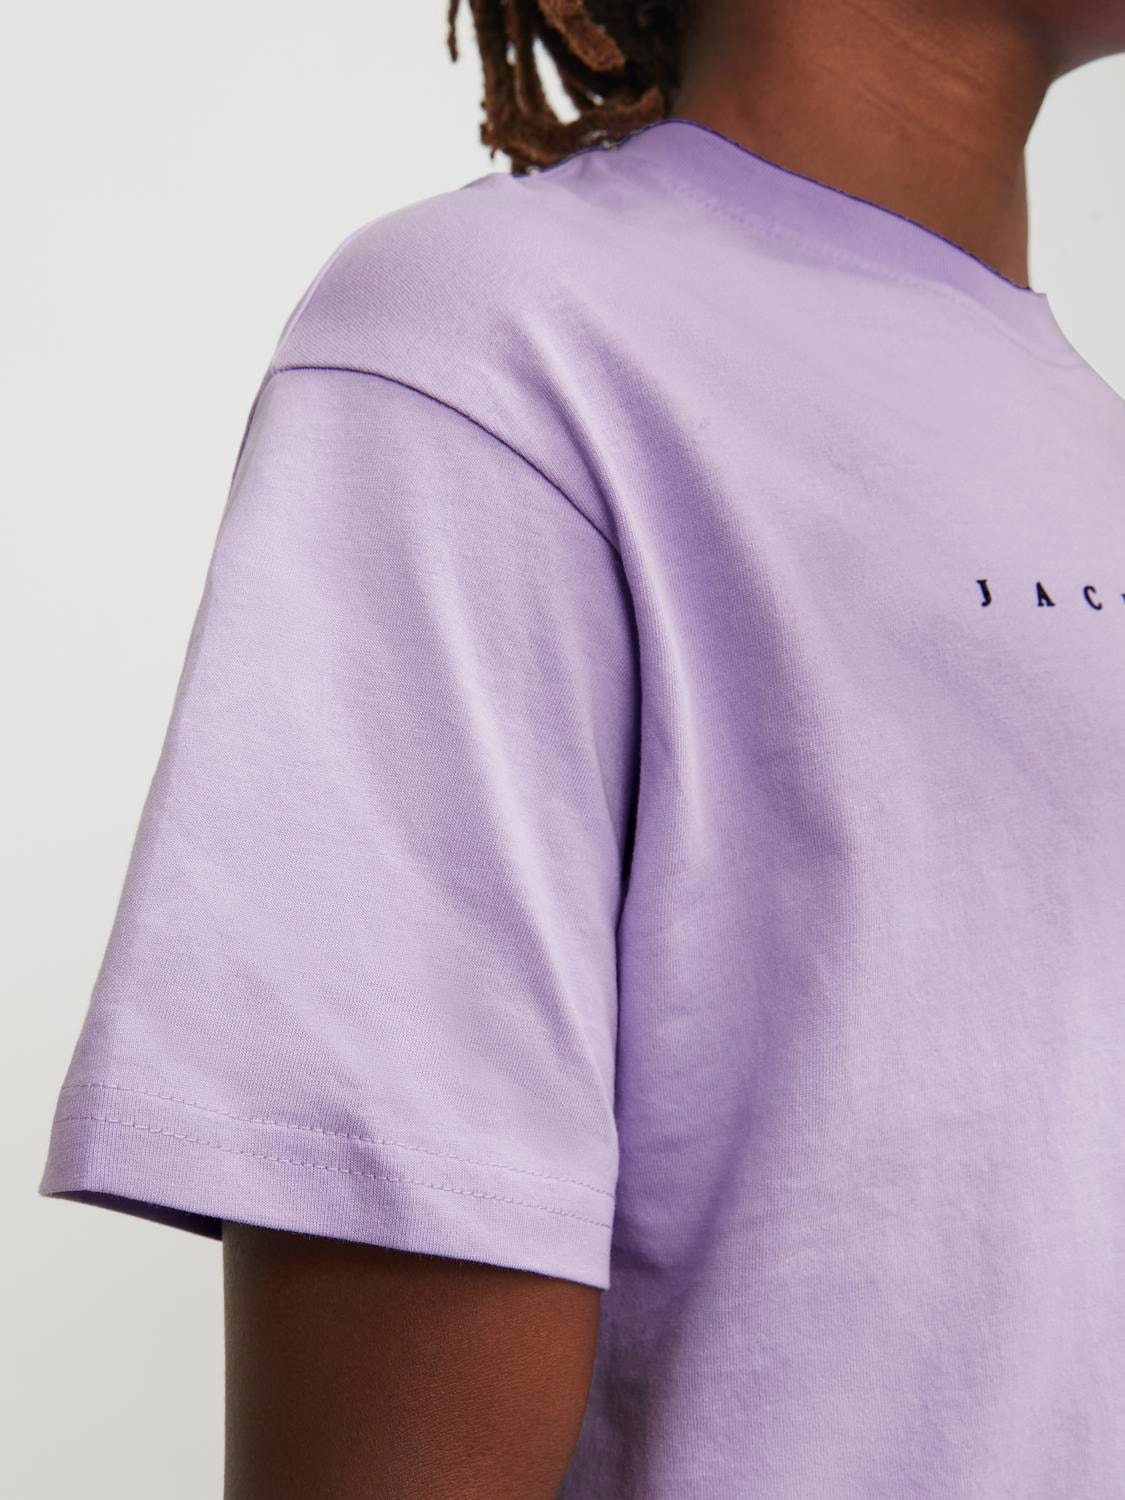 Jack & Jones T-shirt Logo Para meninos -Purple Rose - 12237435